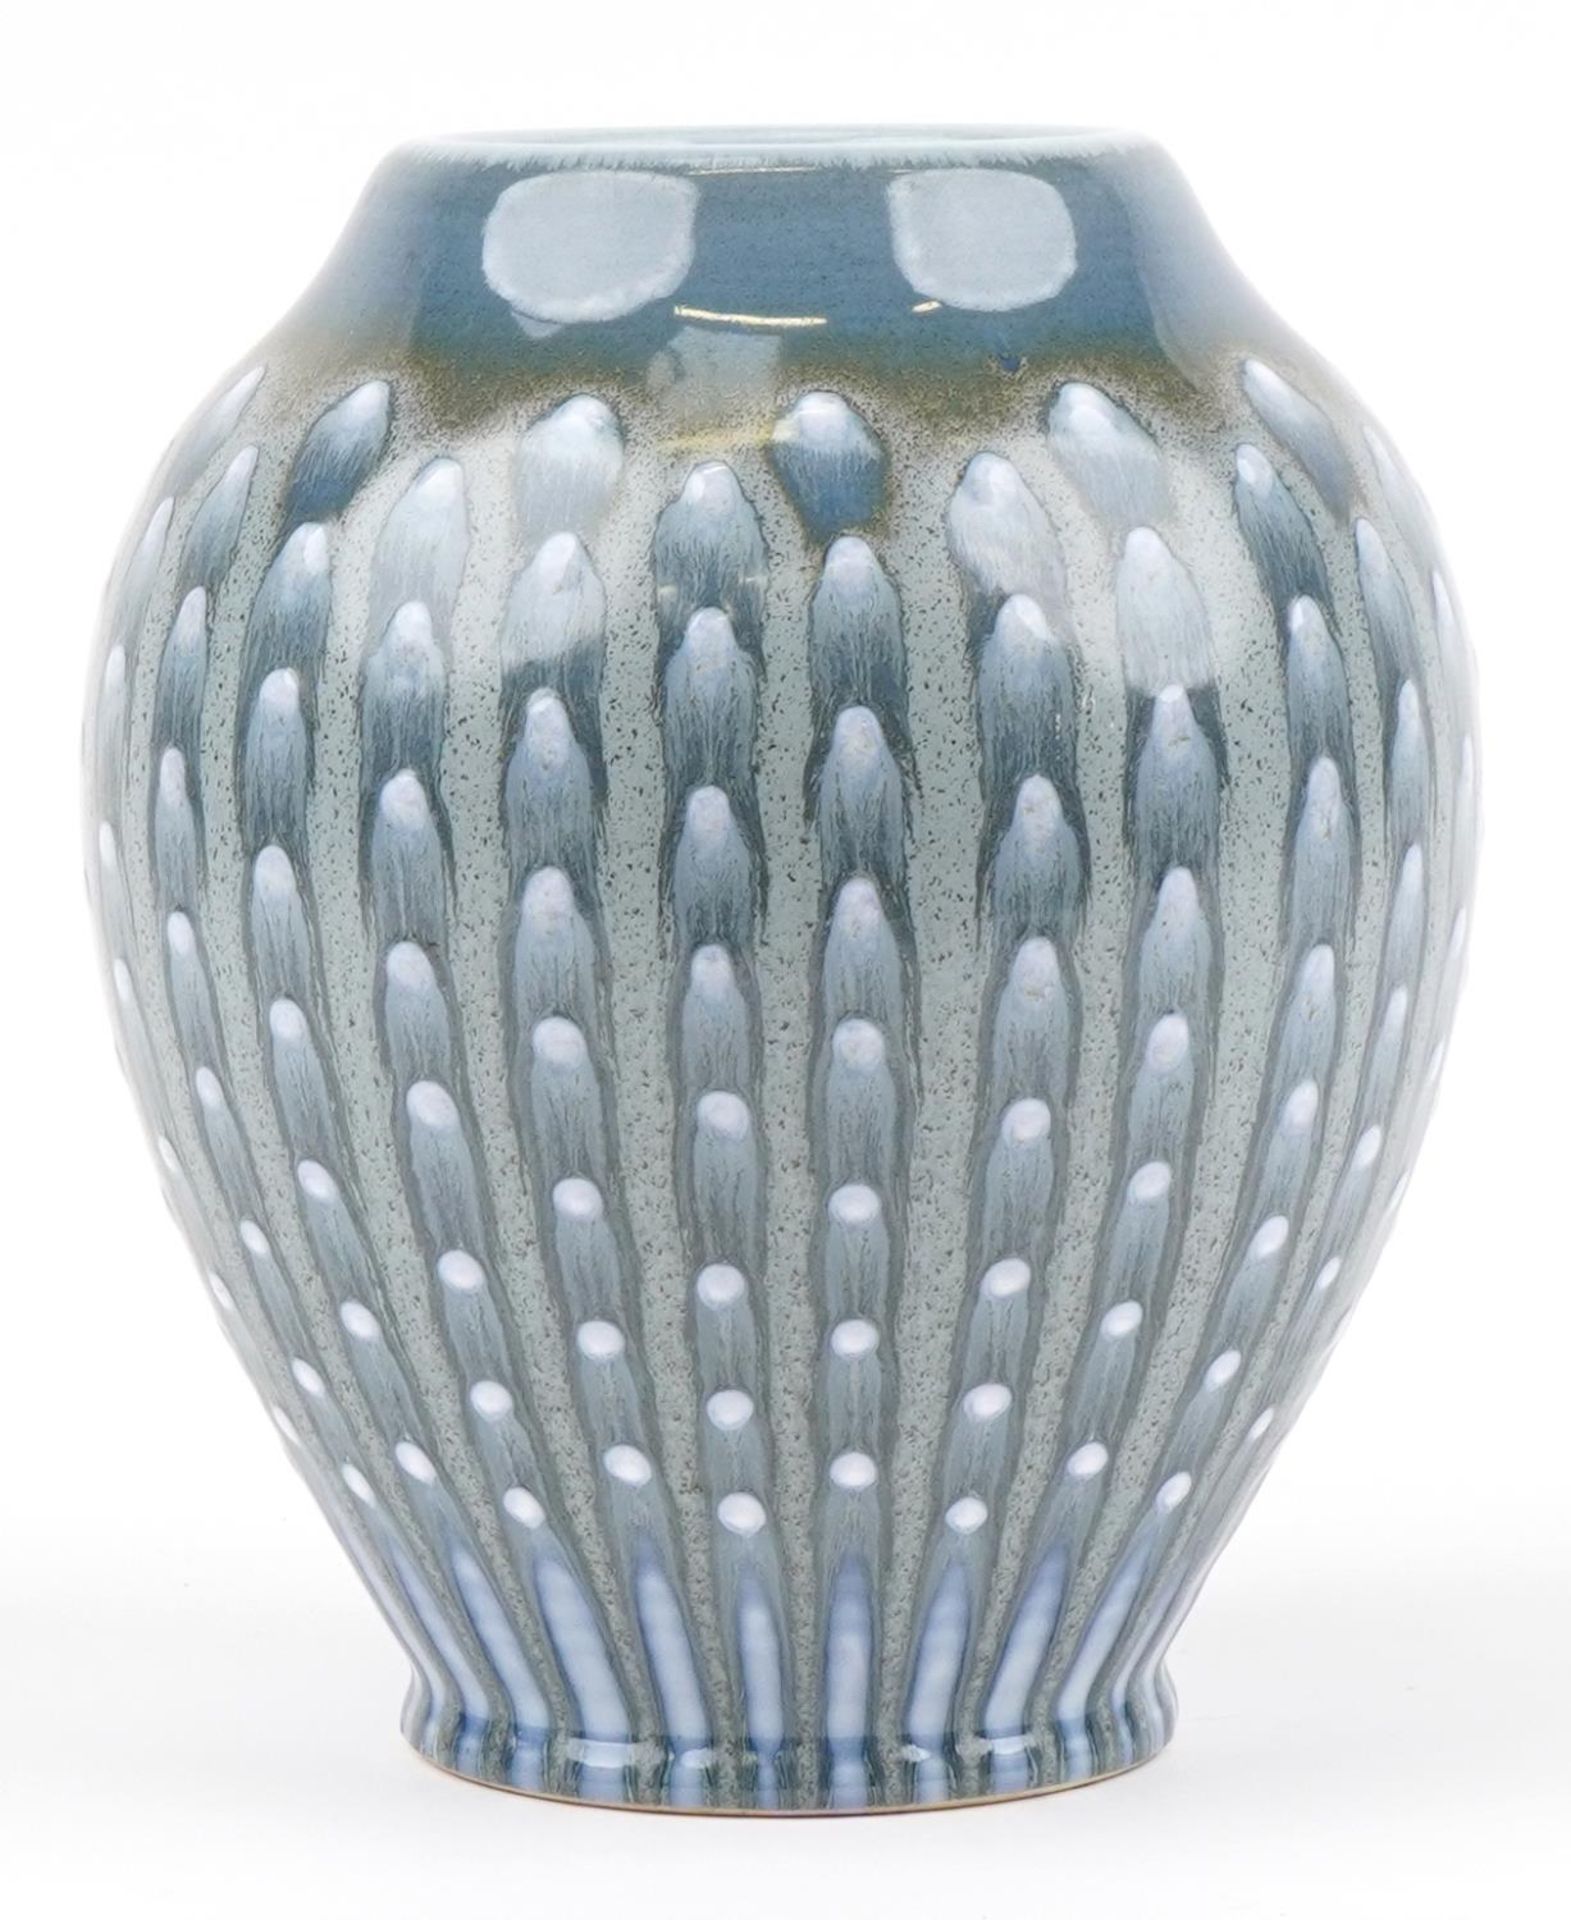 Pilkington's Royal Lancastrian vase having a mottled blue dripping glaze, impressed V3 to the - Image 2 of 4